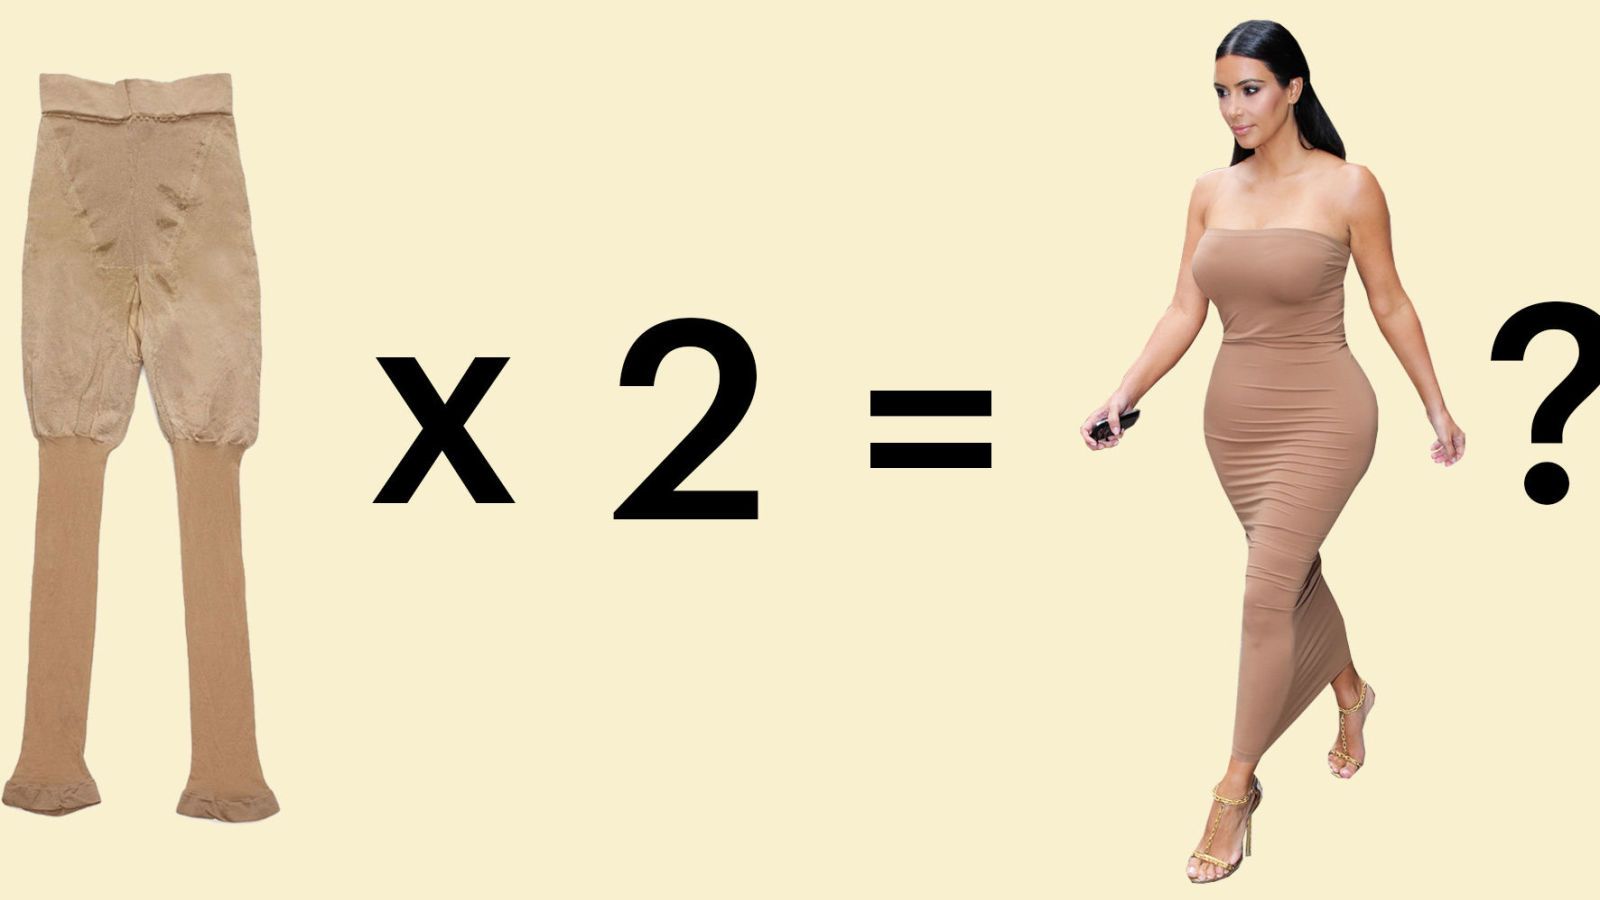 Kim Kardashian says it takes two pairs of Spanx to fit her tight